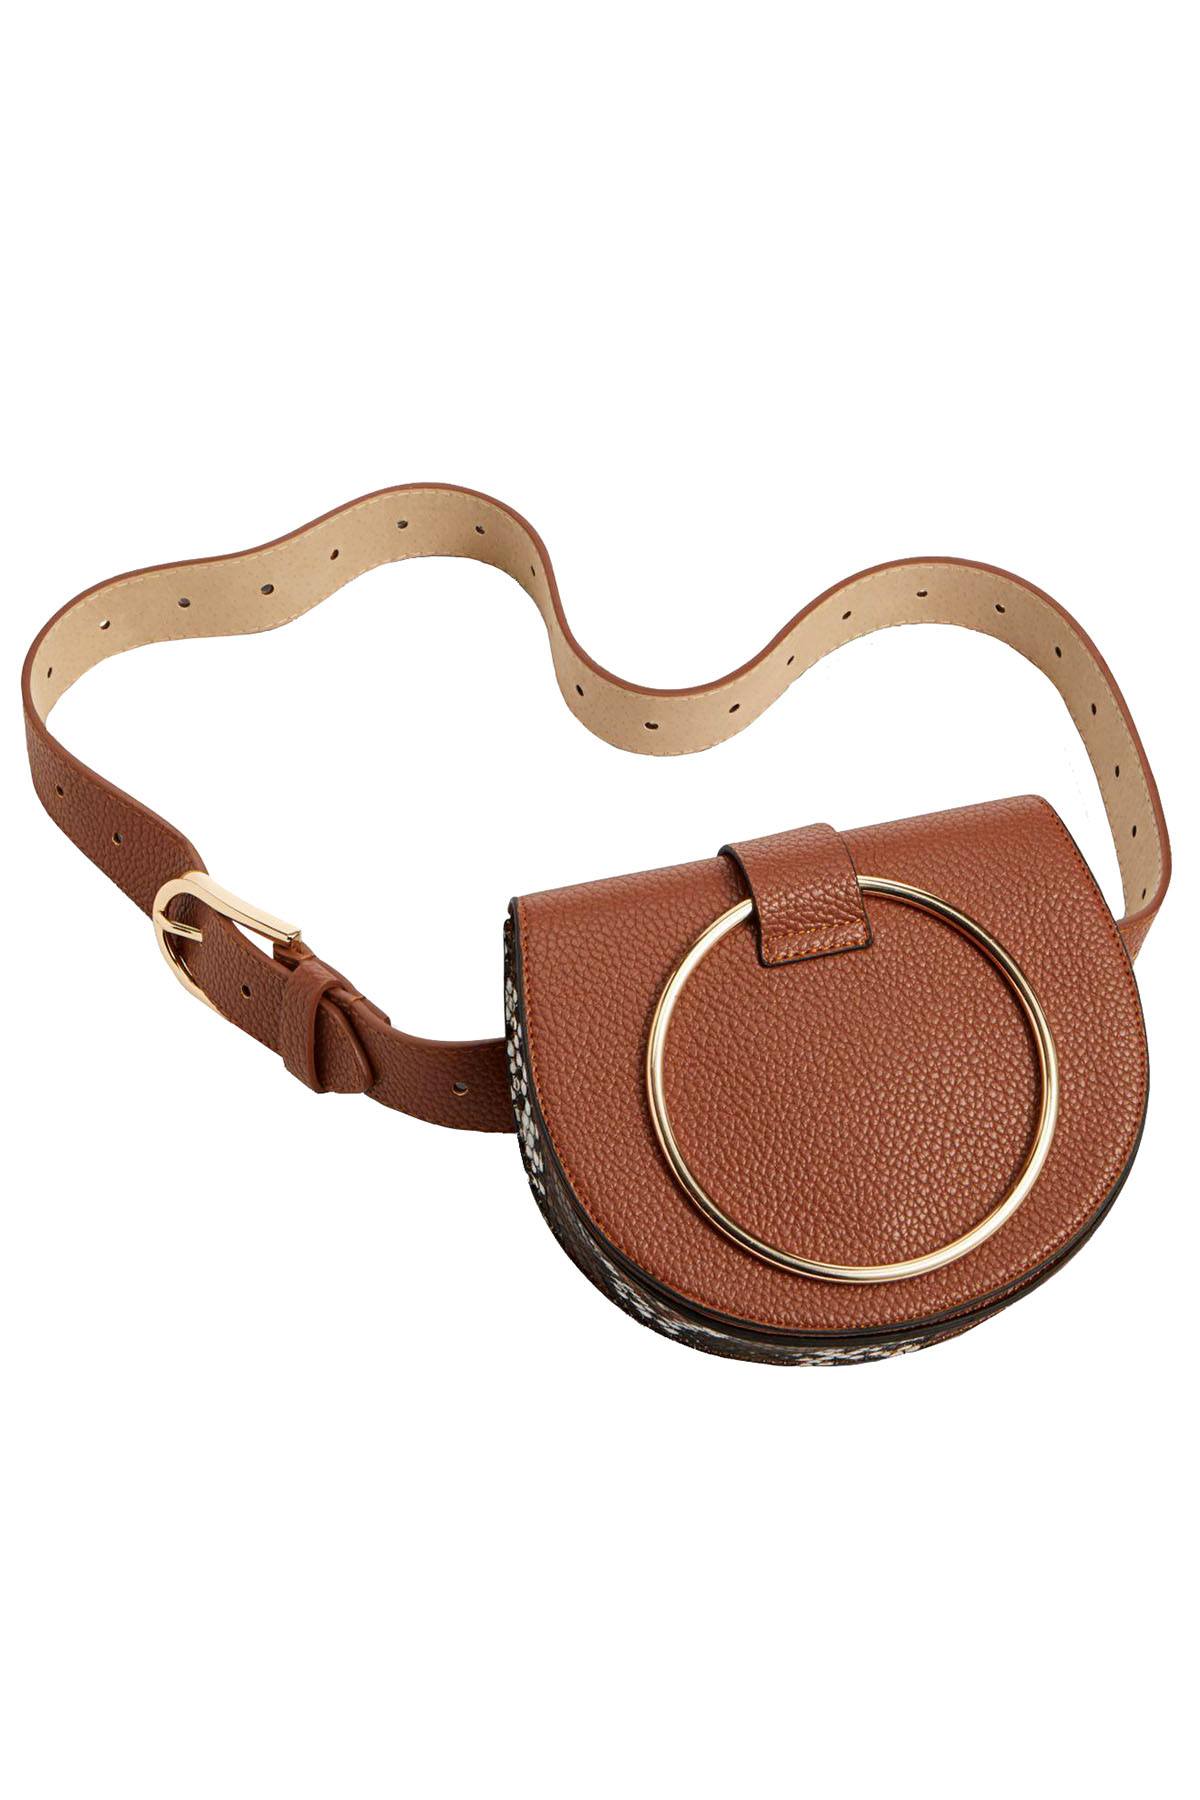 Steve Madden Cognac/Gold Pebbled Faux Leather Convertible Belt Bag